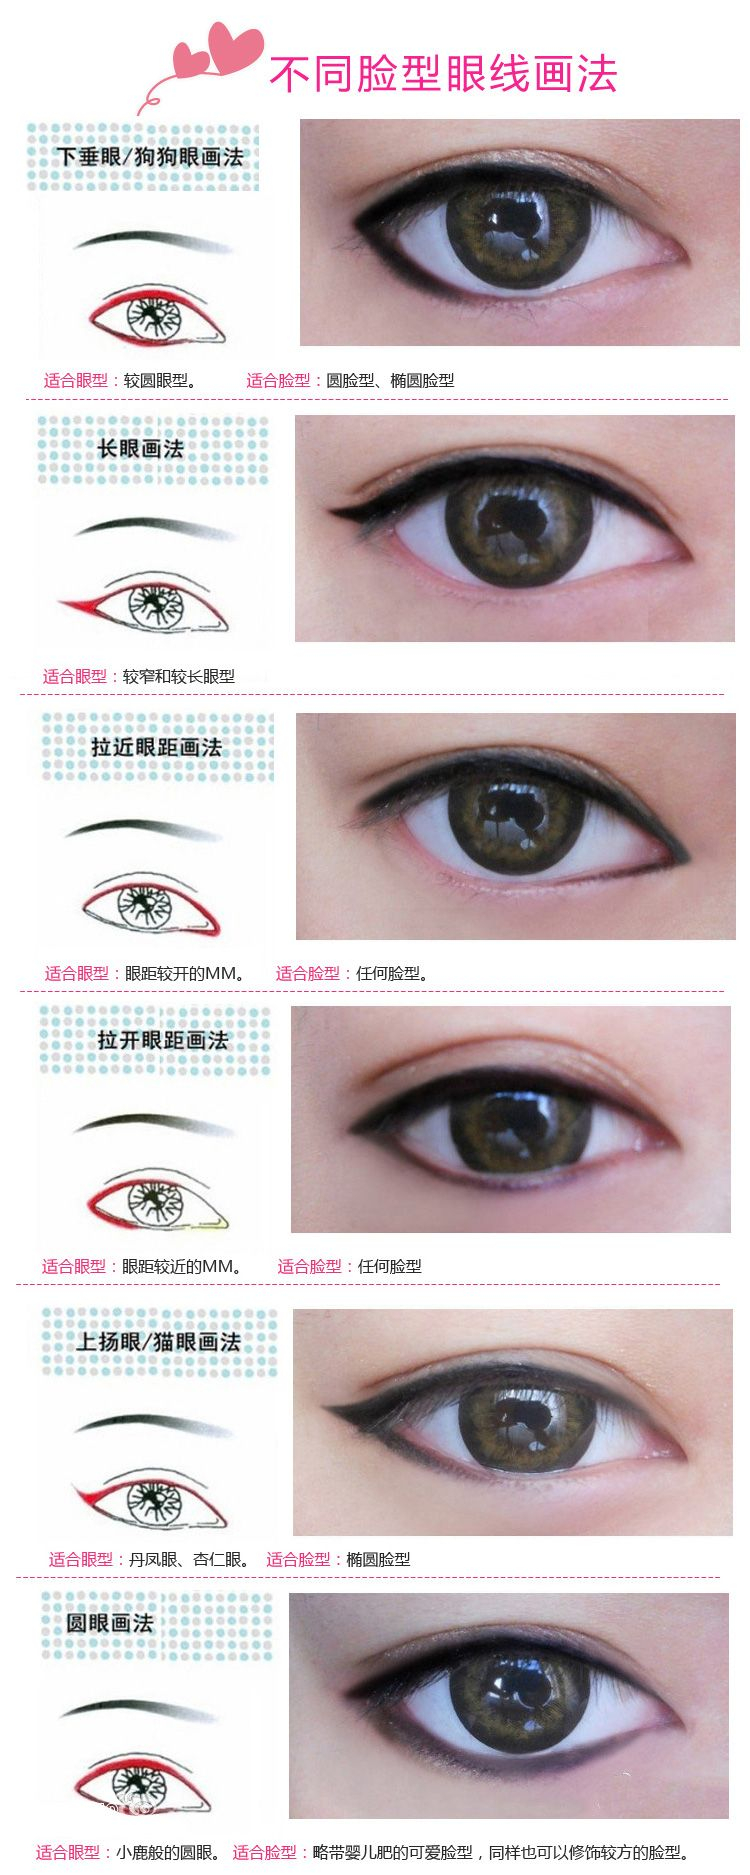 Makeup For Different Eye Shapes Eye Liner Tips For Different Eye Shapes Beauty Ideas Asian Eye